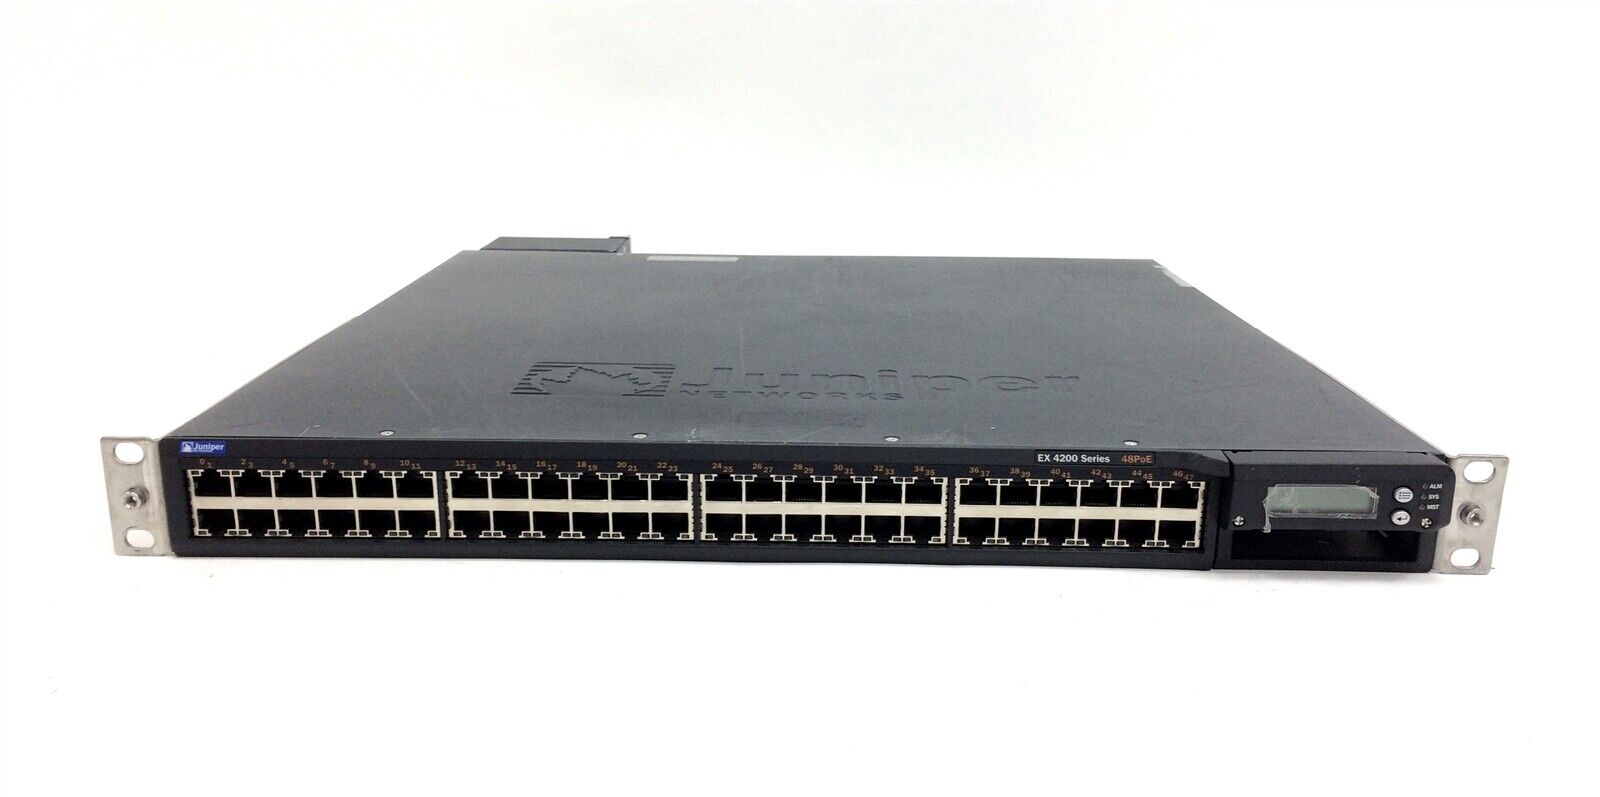 Juniper Networks EX4200-48P 48 Port Gigabit Ethernet PoE Switch (1x) PSU w/ Ears